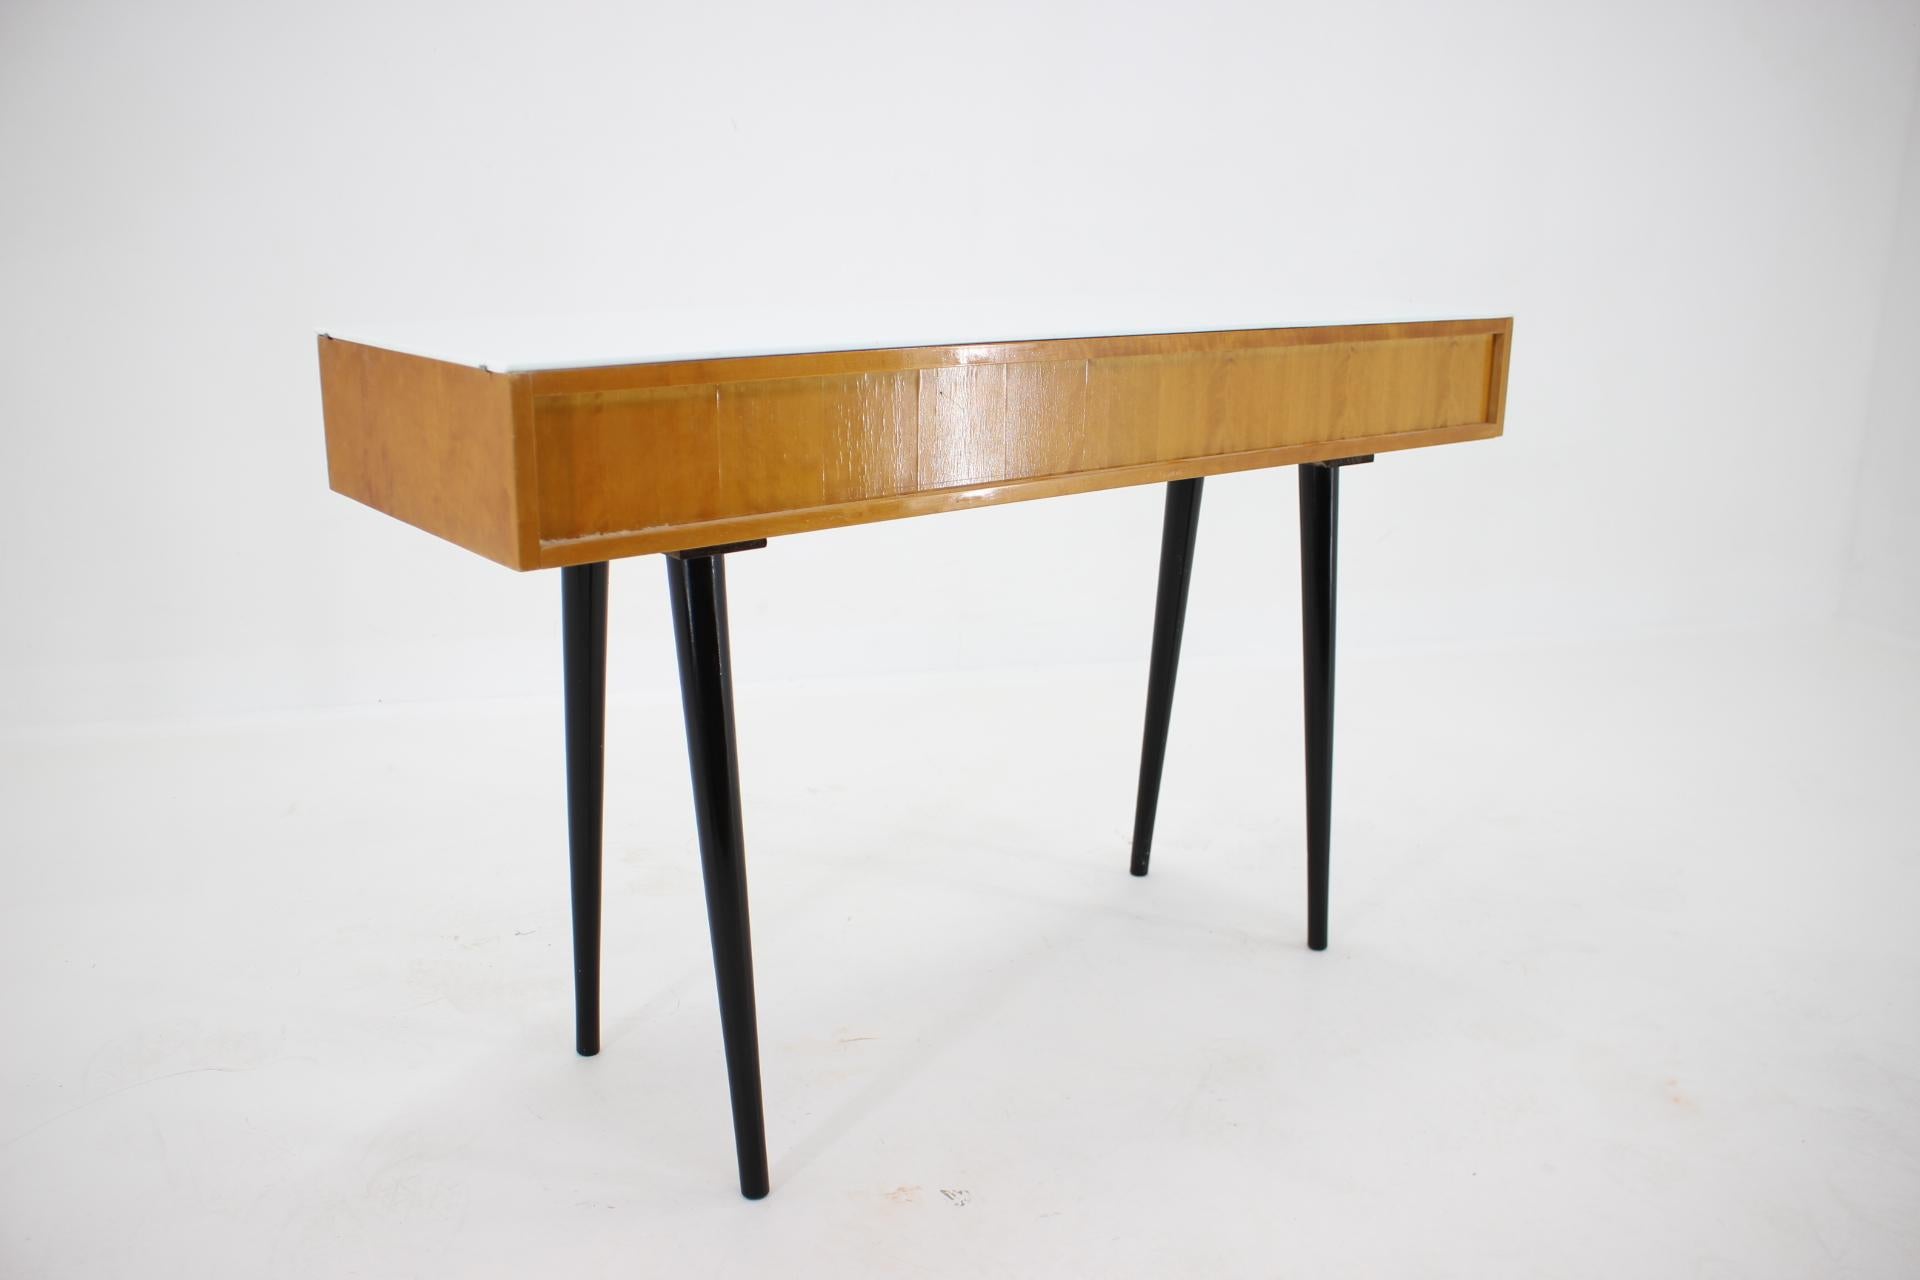 Czech Mid Century Writing Desk/Table Designed by Architect M. Požár, 1960s